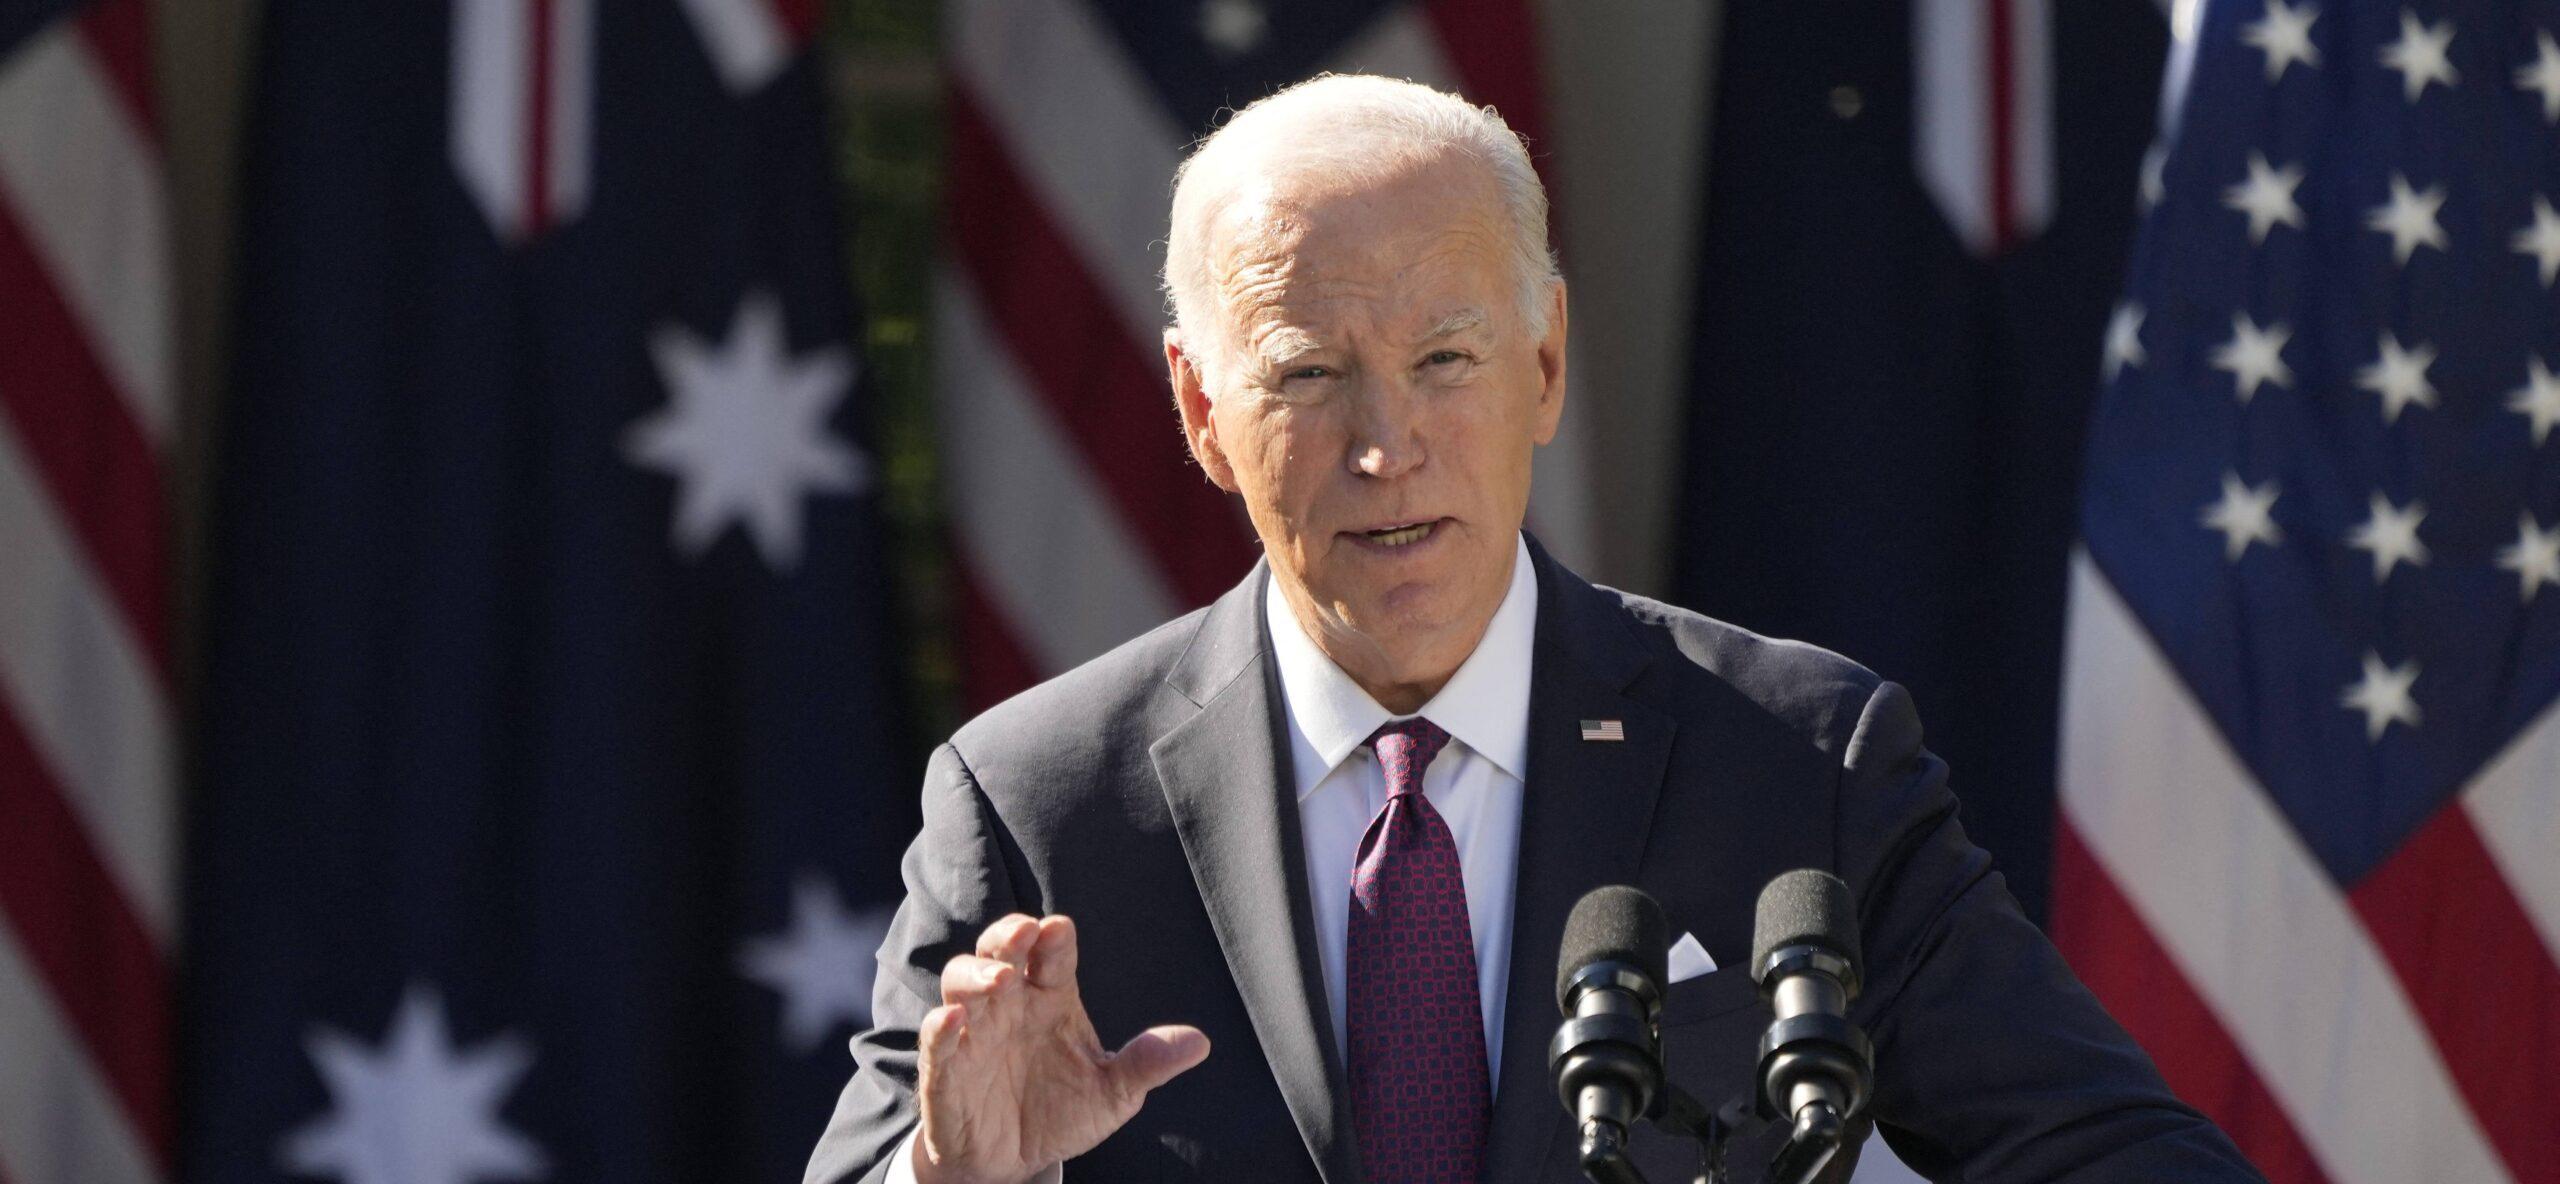 Joe Biden BLASTED For ‘Embarrassing’ & ‘Pathetic’ Moment At Arlington